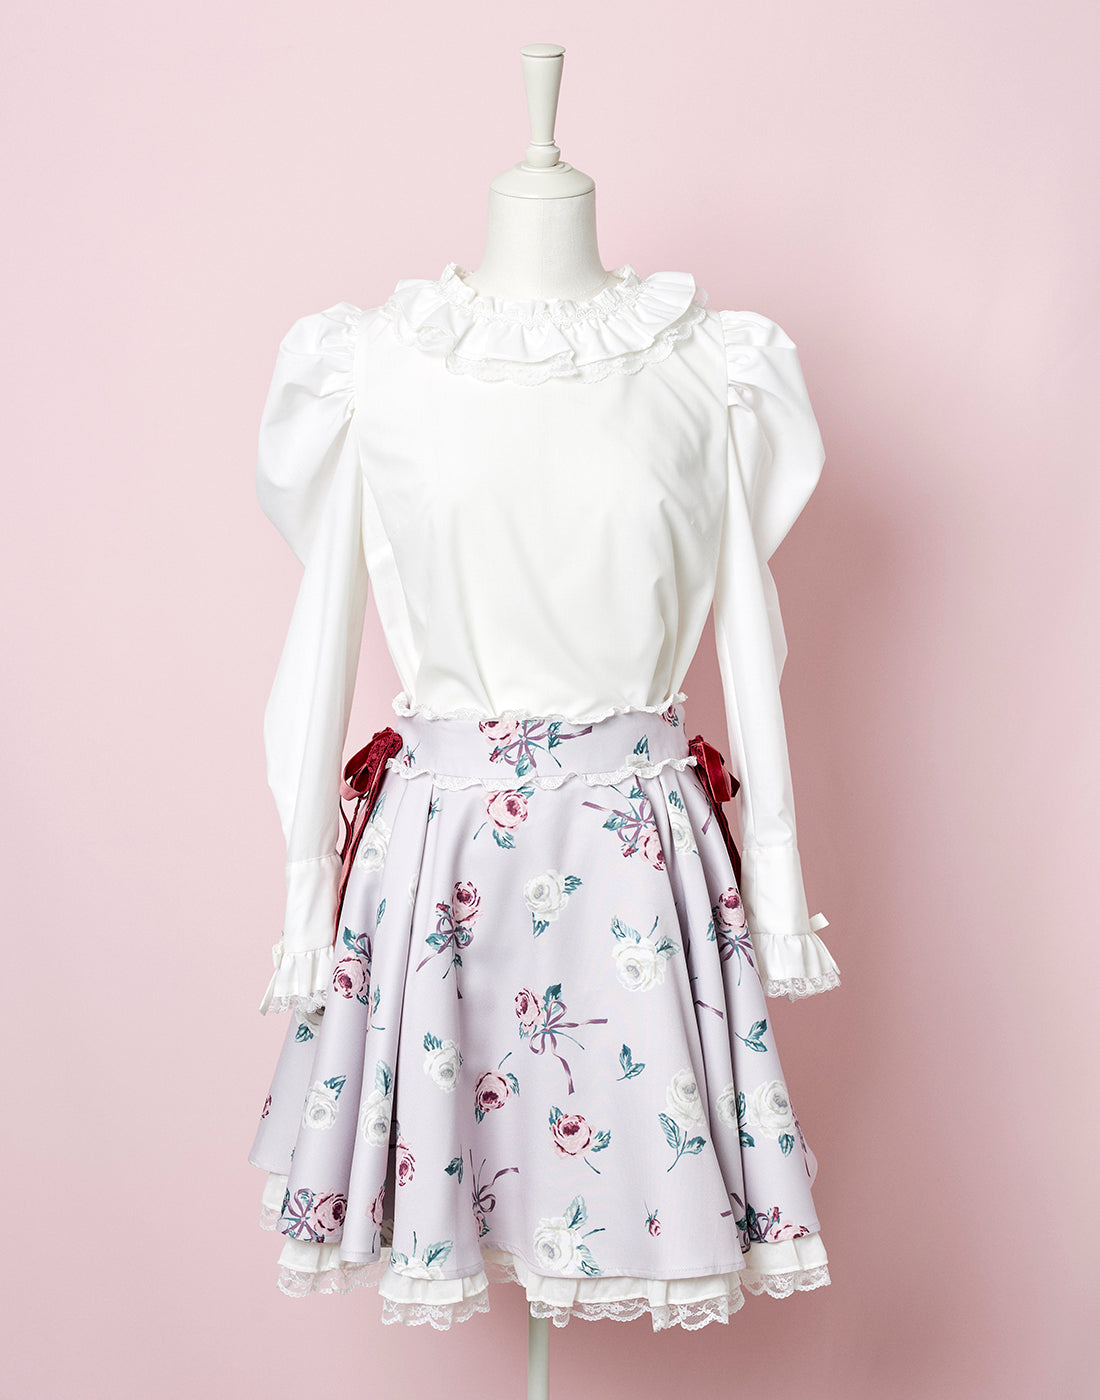 My beloved roseスカート